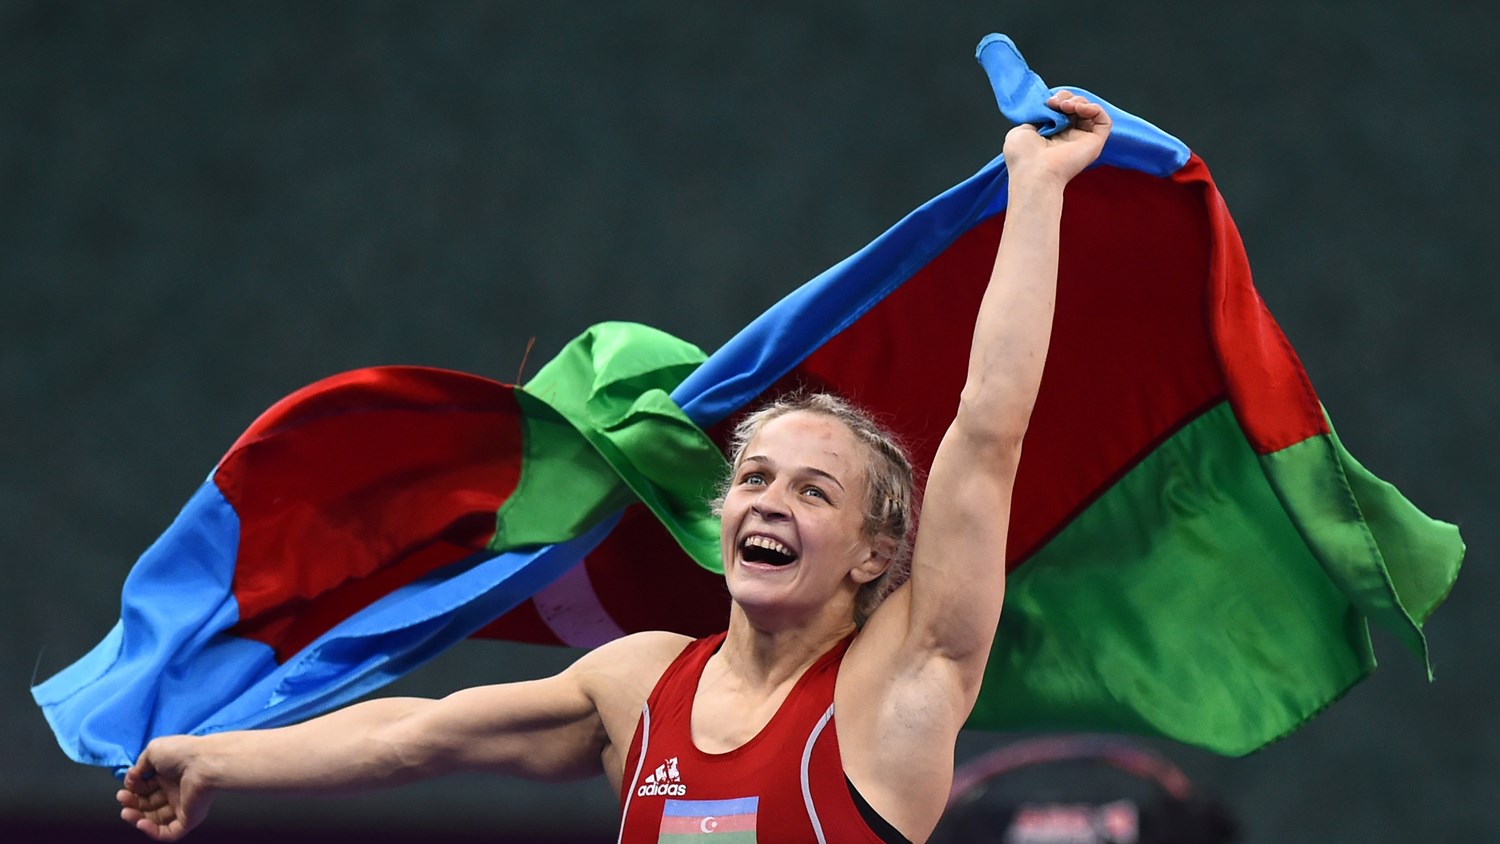 Baku 2015: Home glory for Stadnyk on day of Wrestling upsets